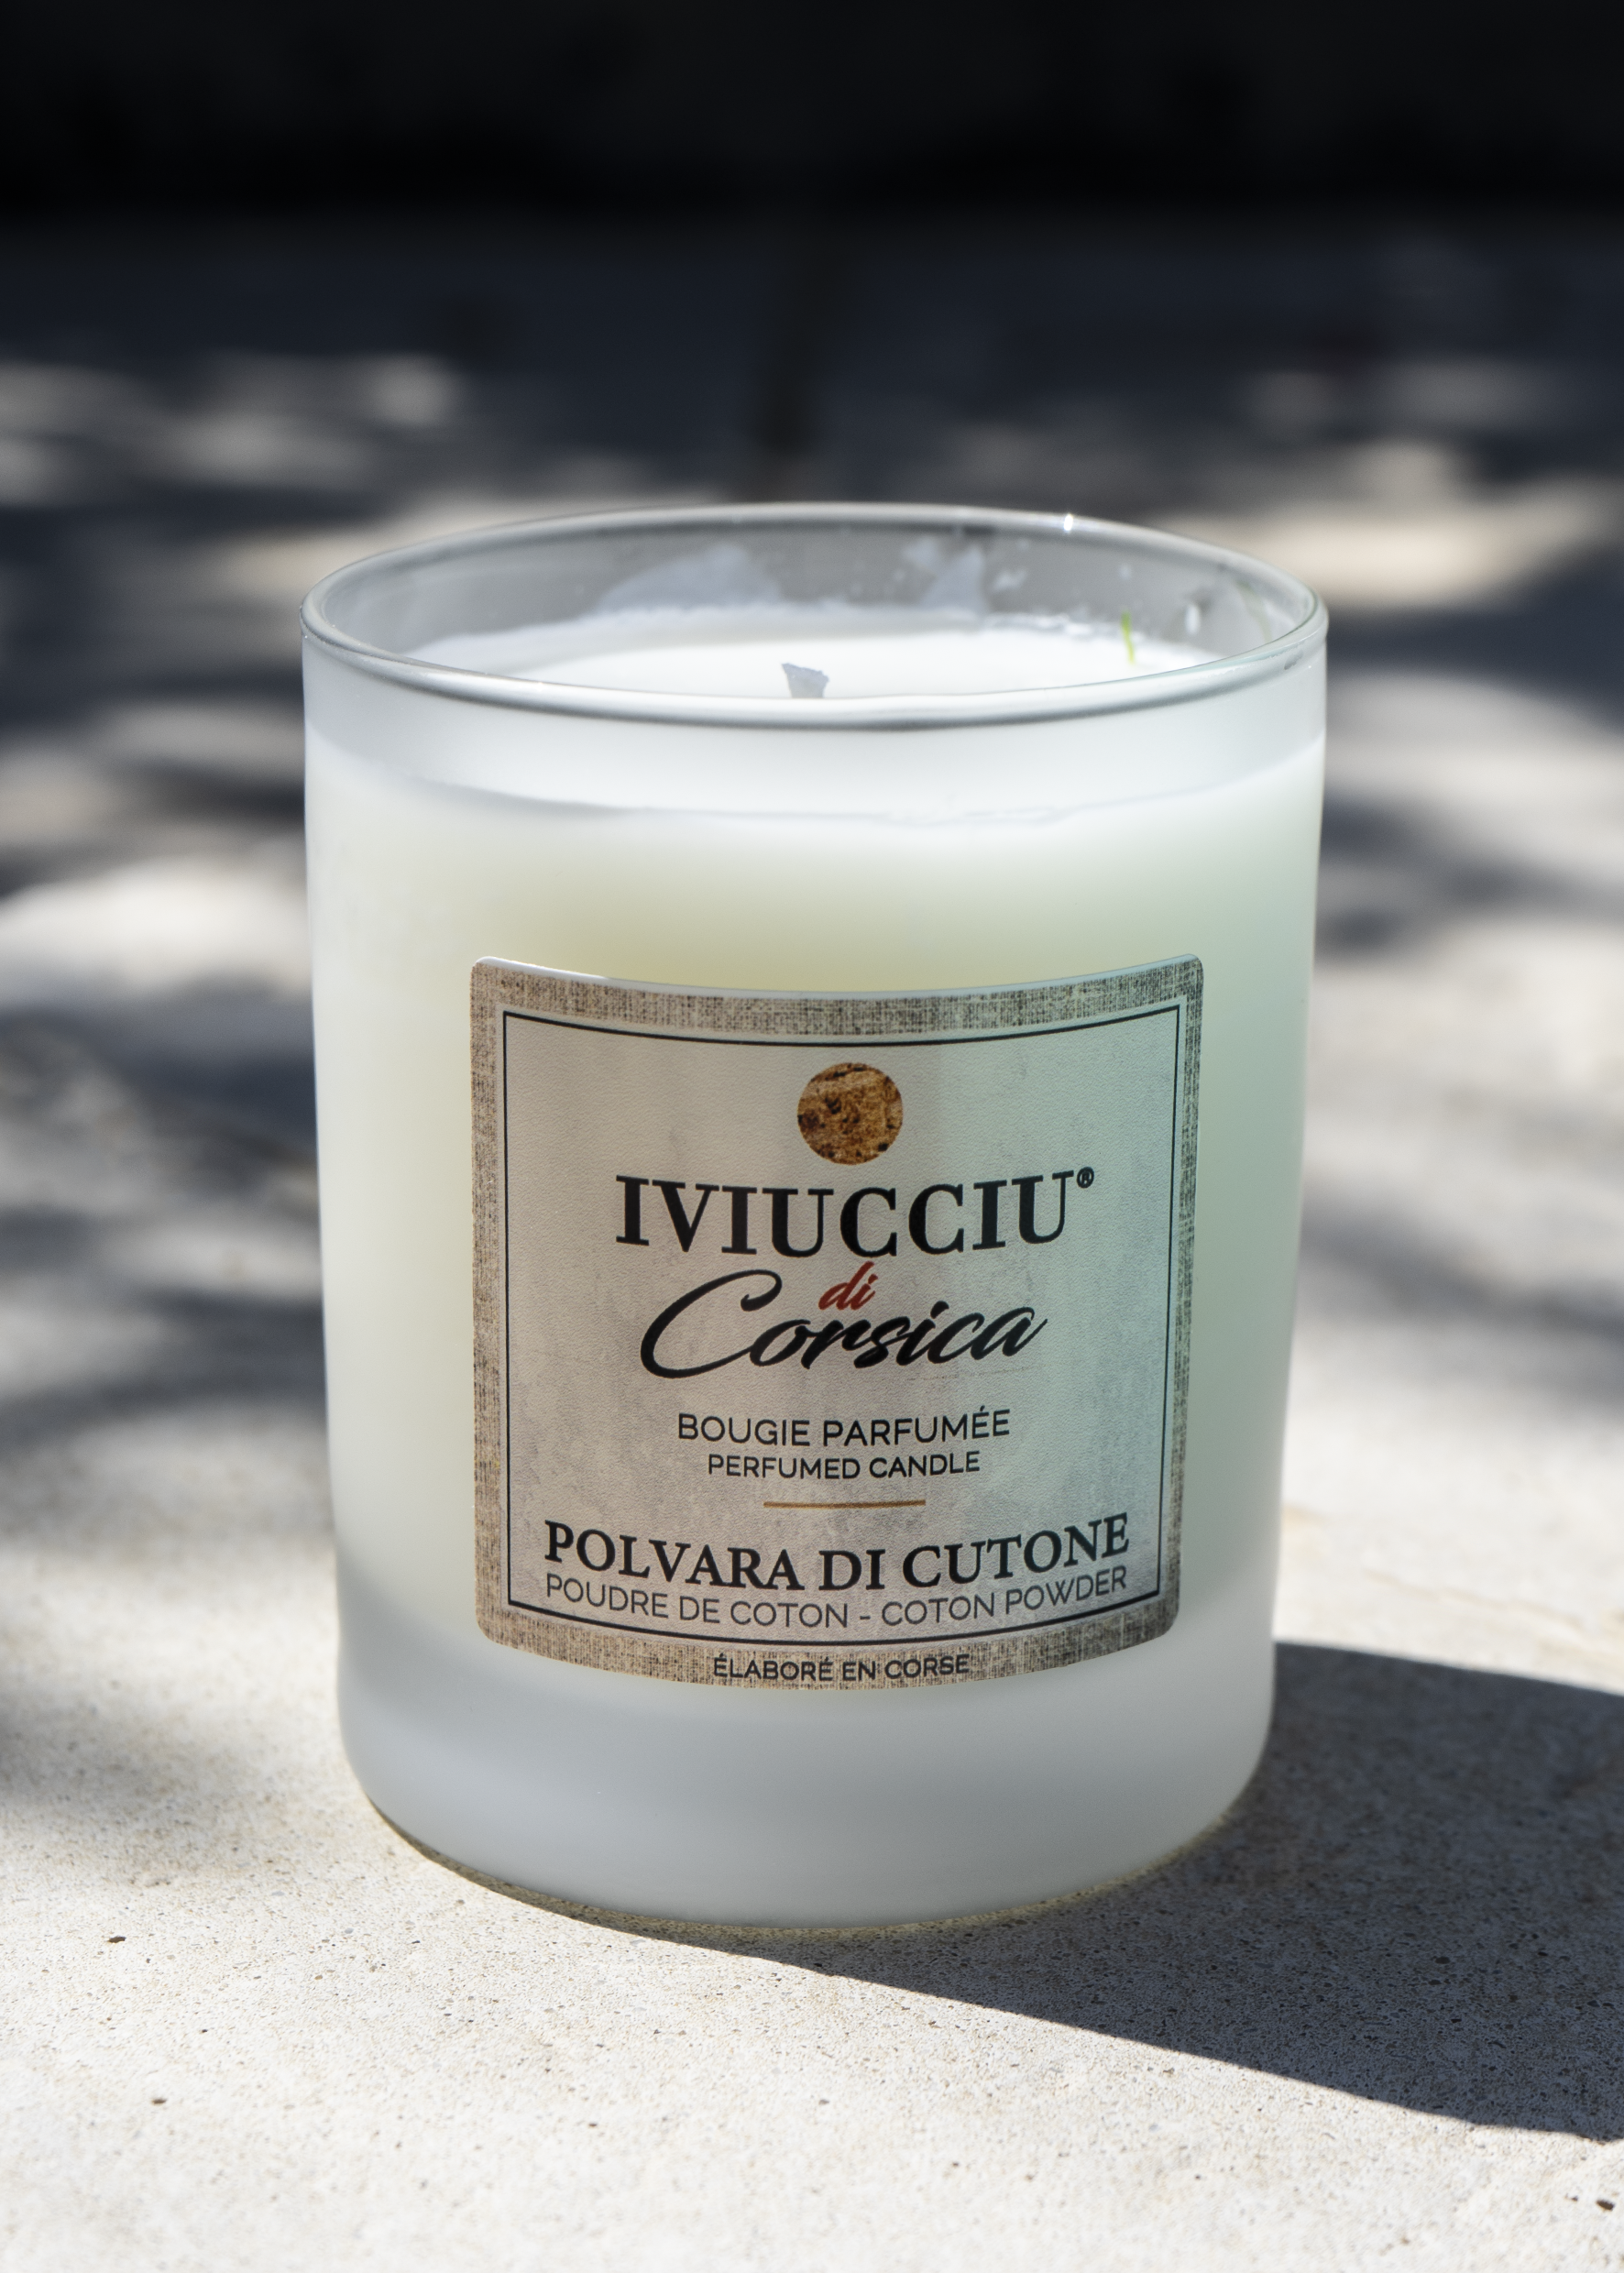 Bougie Poudre de coton - Iviucciu Di Corsica - Cire végétale de soja